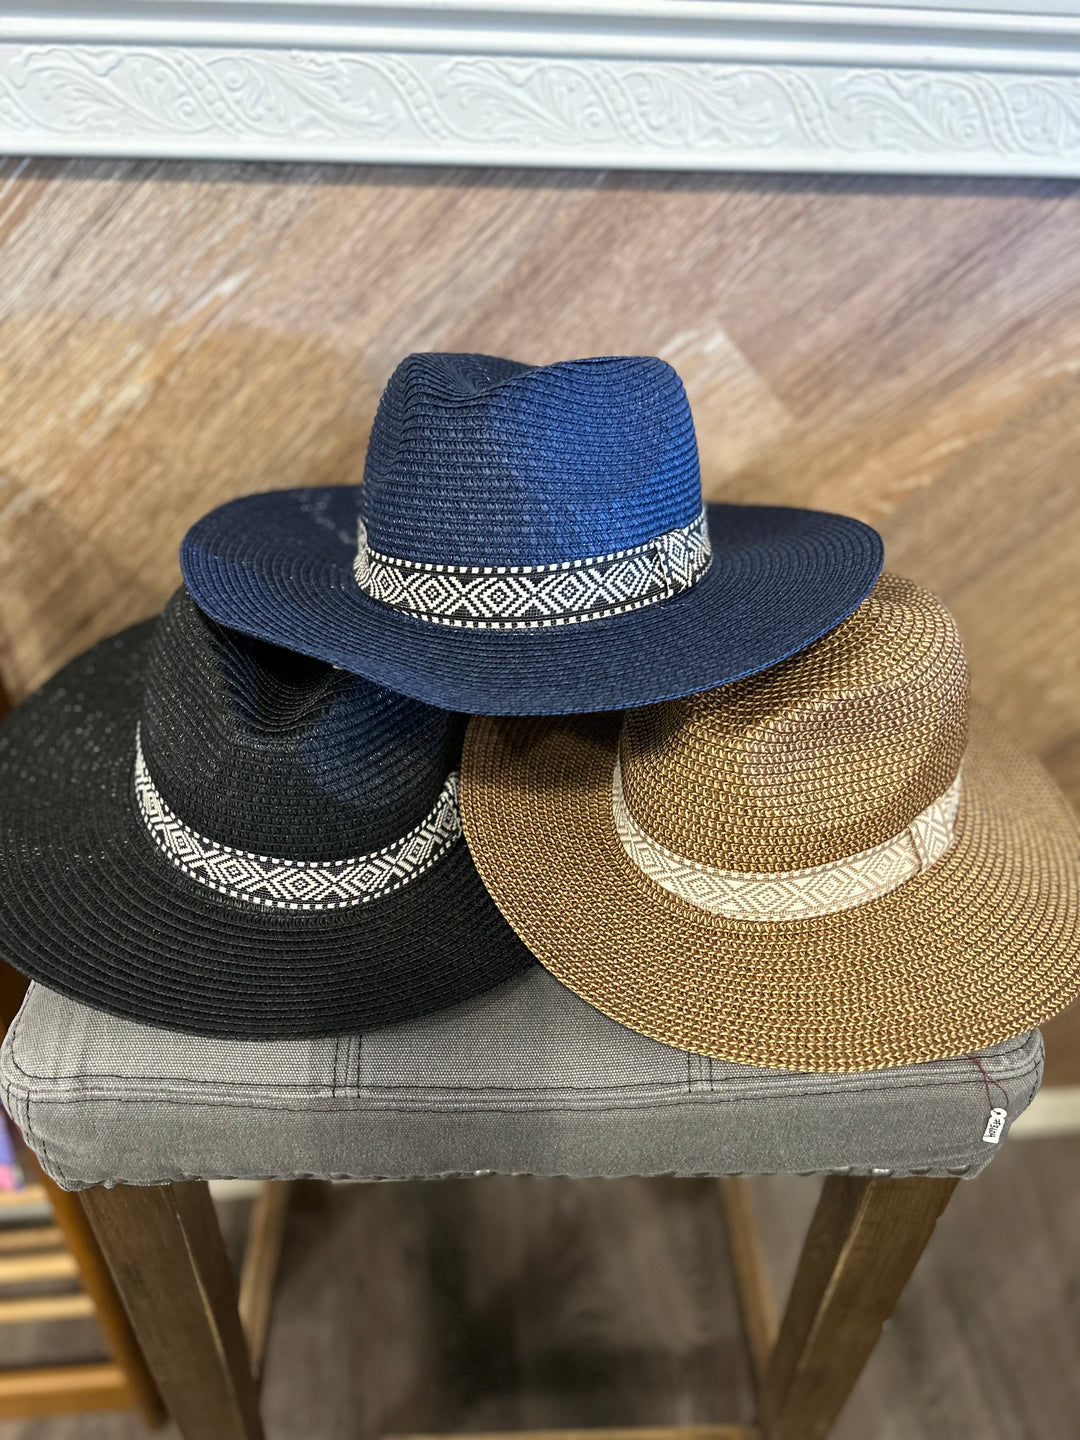 Accessories, Panama Straw Hat